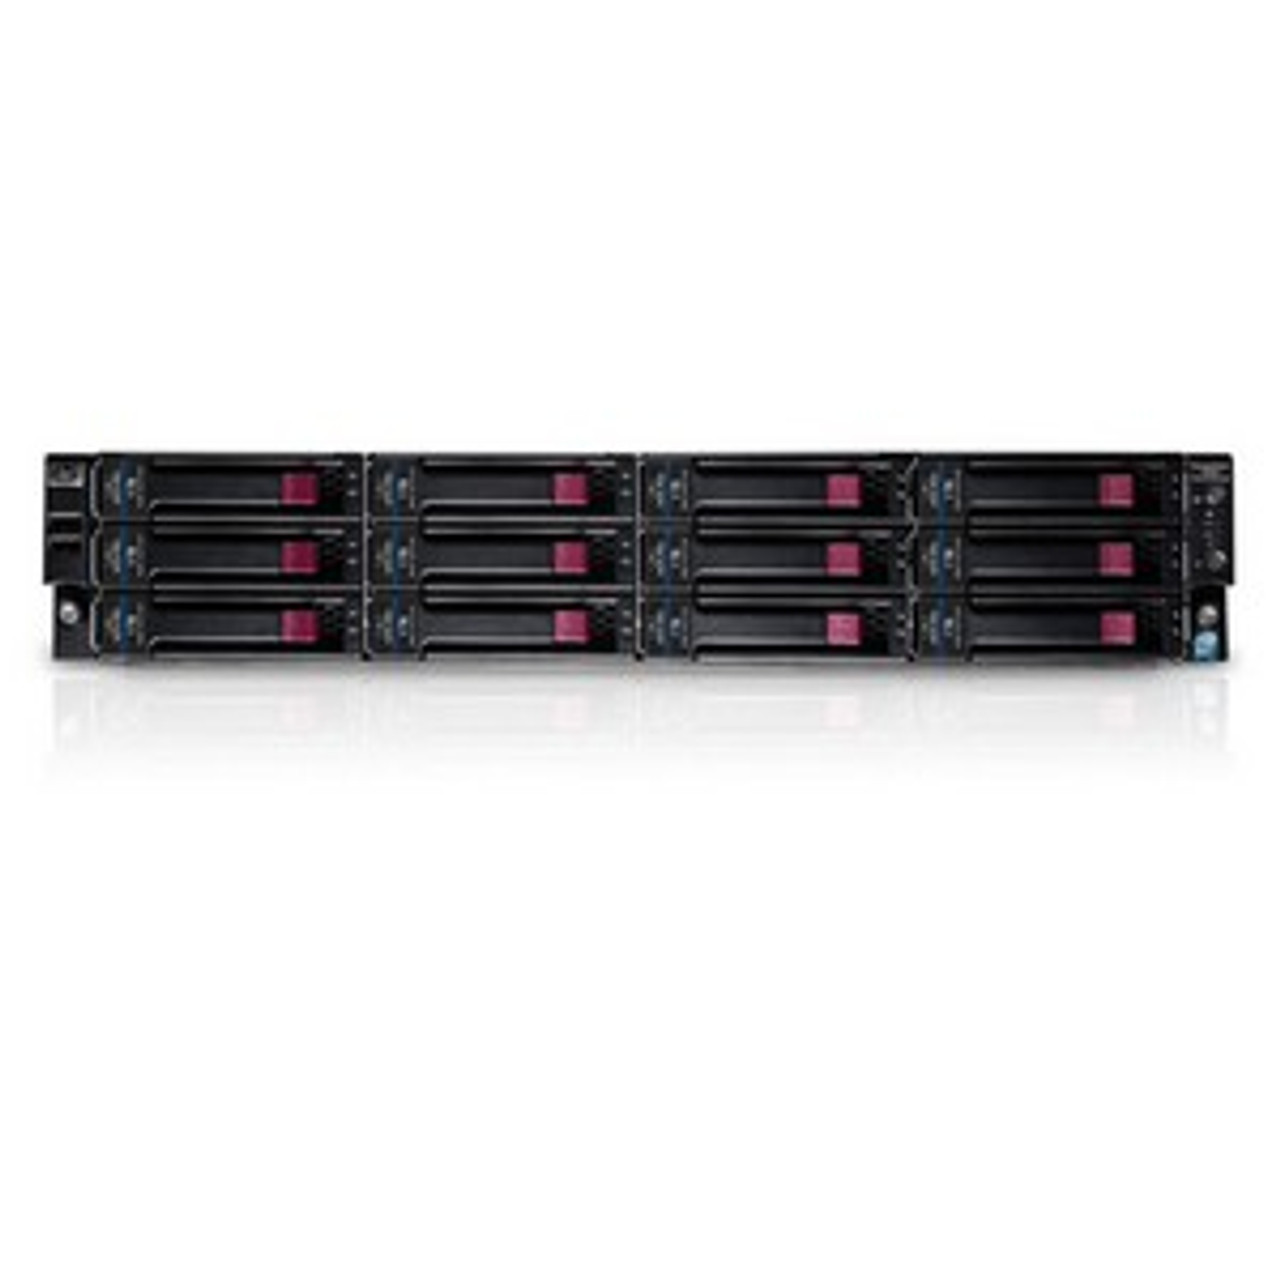 AP789A - HP StorageWorks X1600 Network Storage Server 1 x Intel Xeon E5520 2.26GHz 12TB RJ-45 Network USB Serial VGA